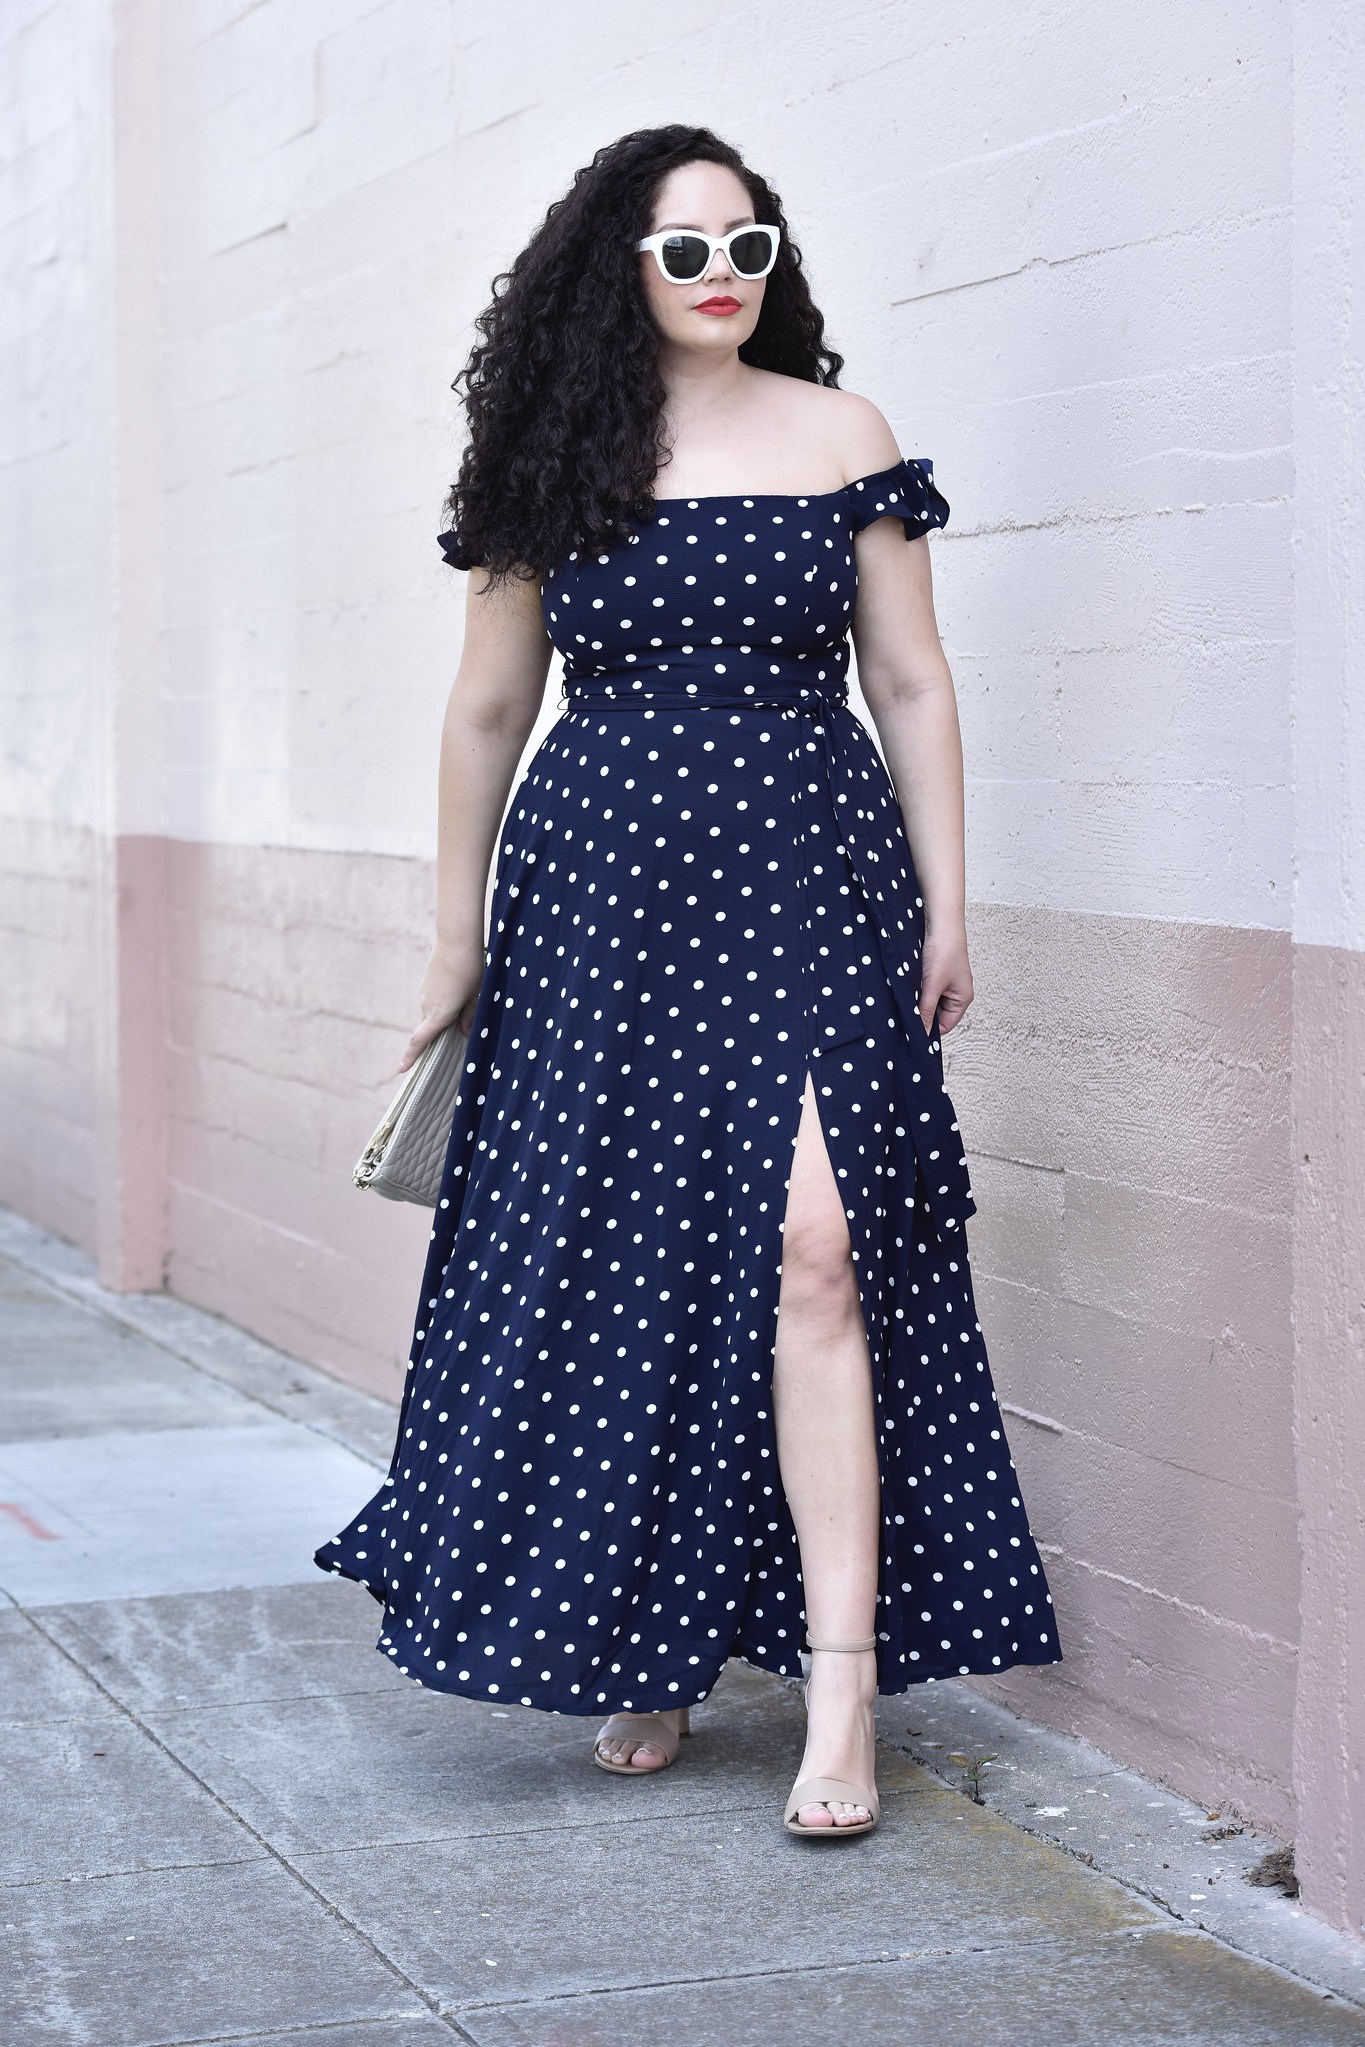 The Must Have Polkadot Dress Of The Season Via @GirlWithCurves #polkadot #dress #blogger #style #cute #ootd